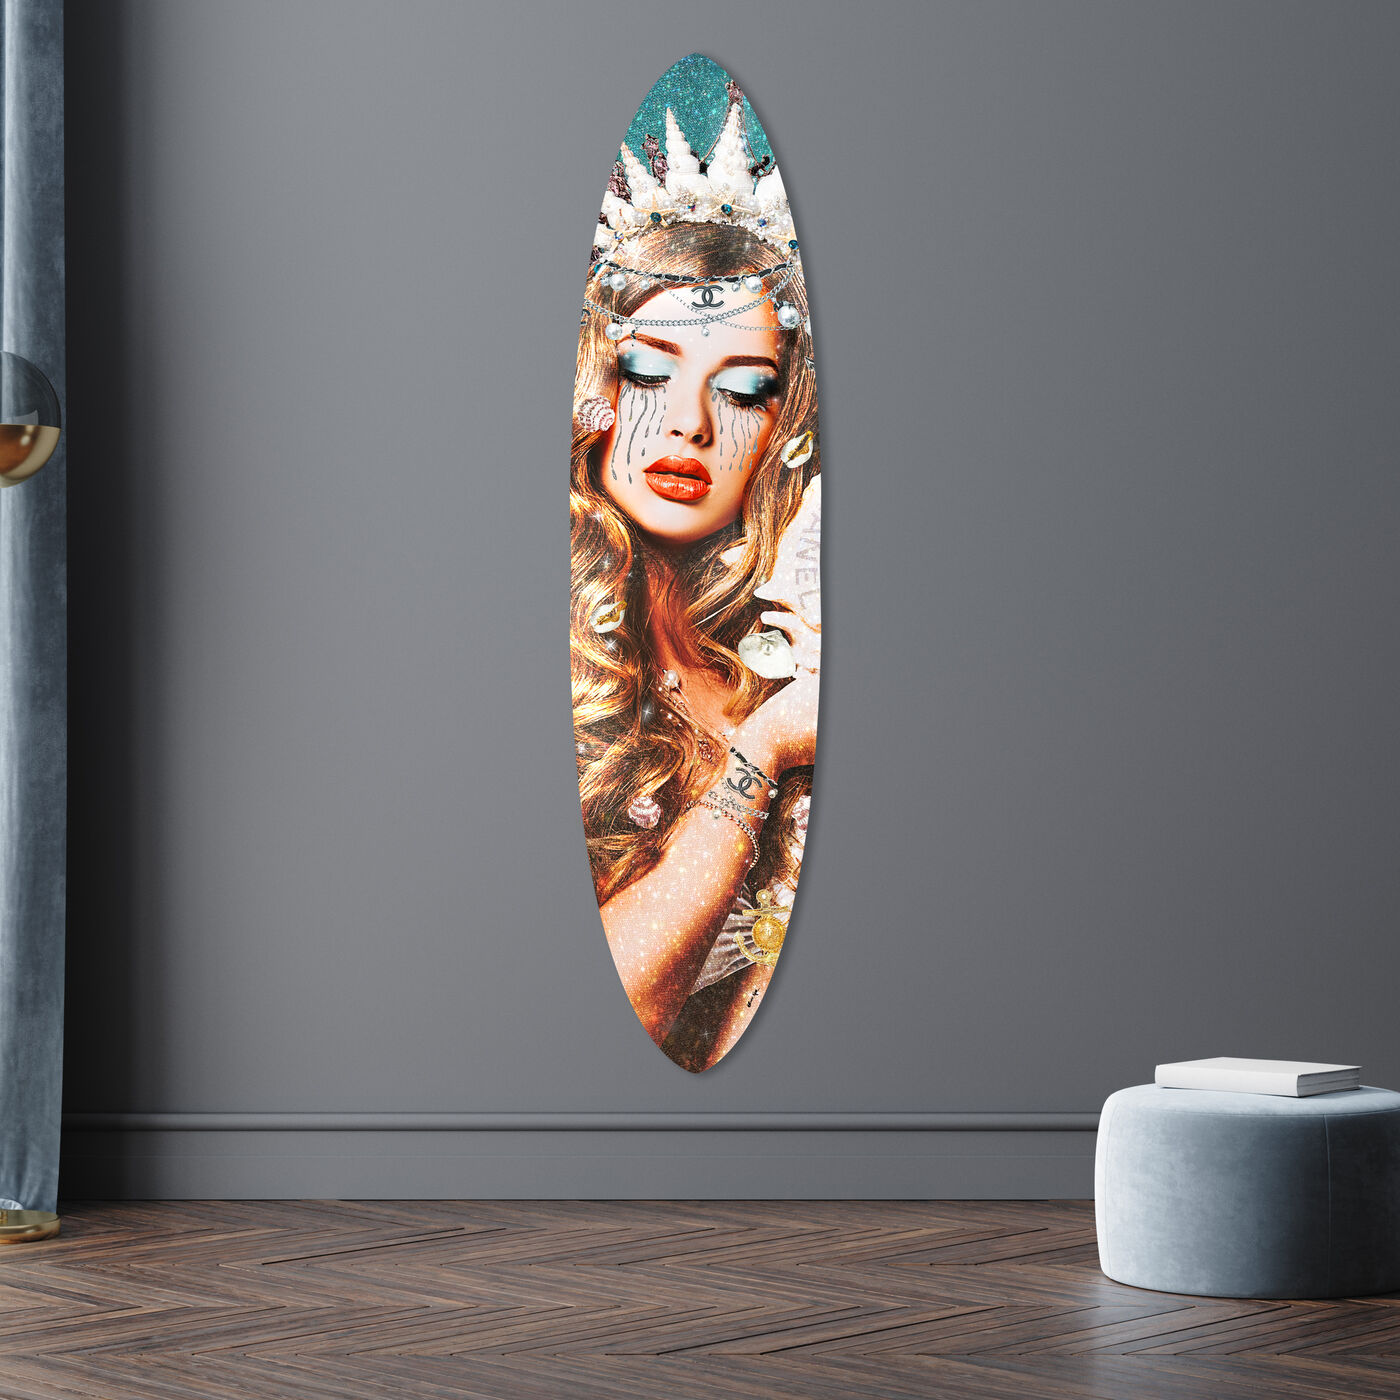 Tales of a Mermaid - Decorative Acrylic Surfboard